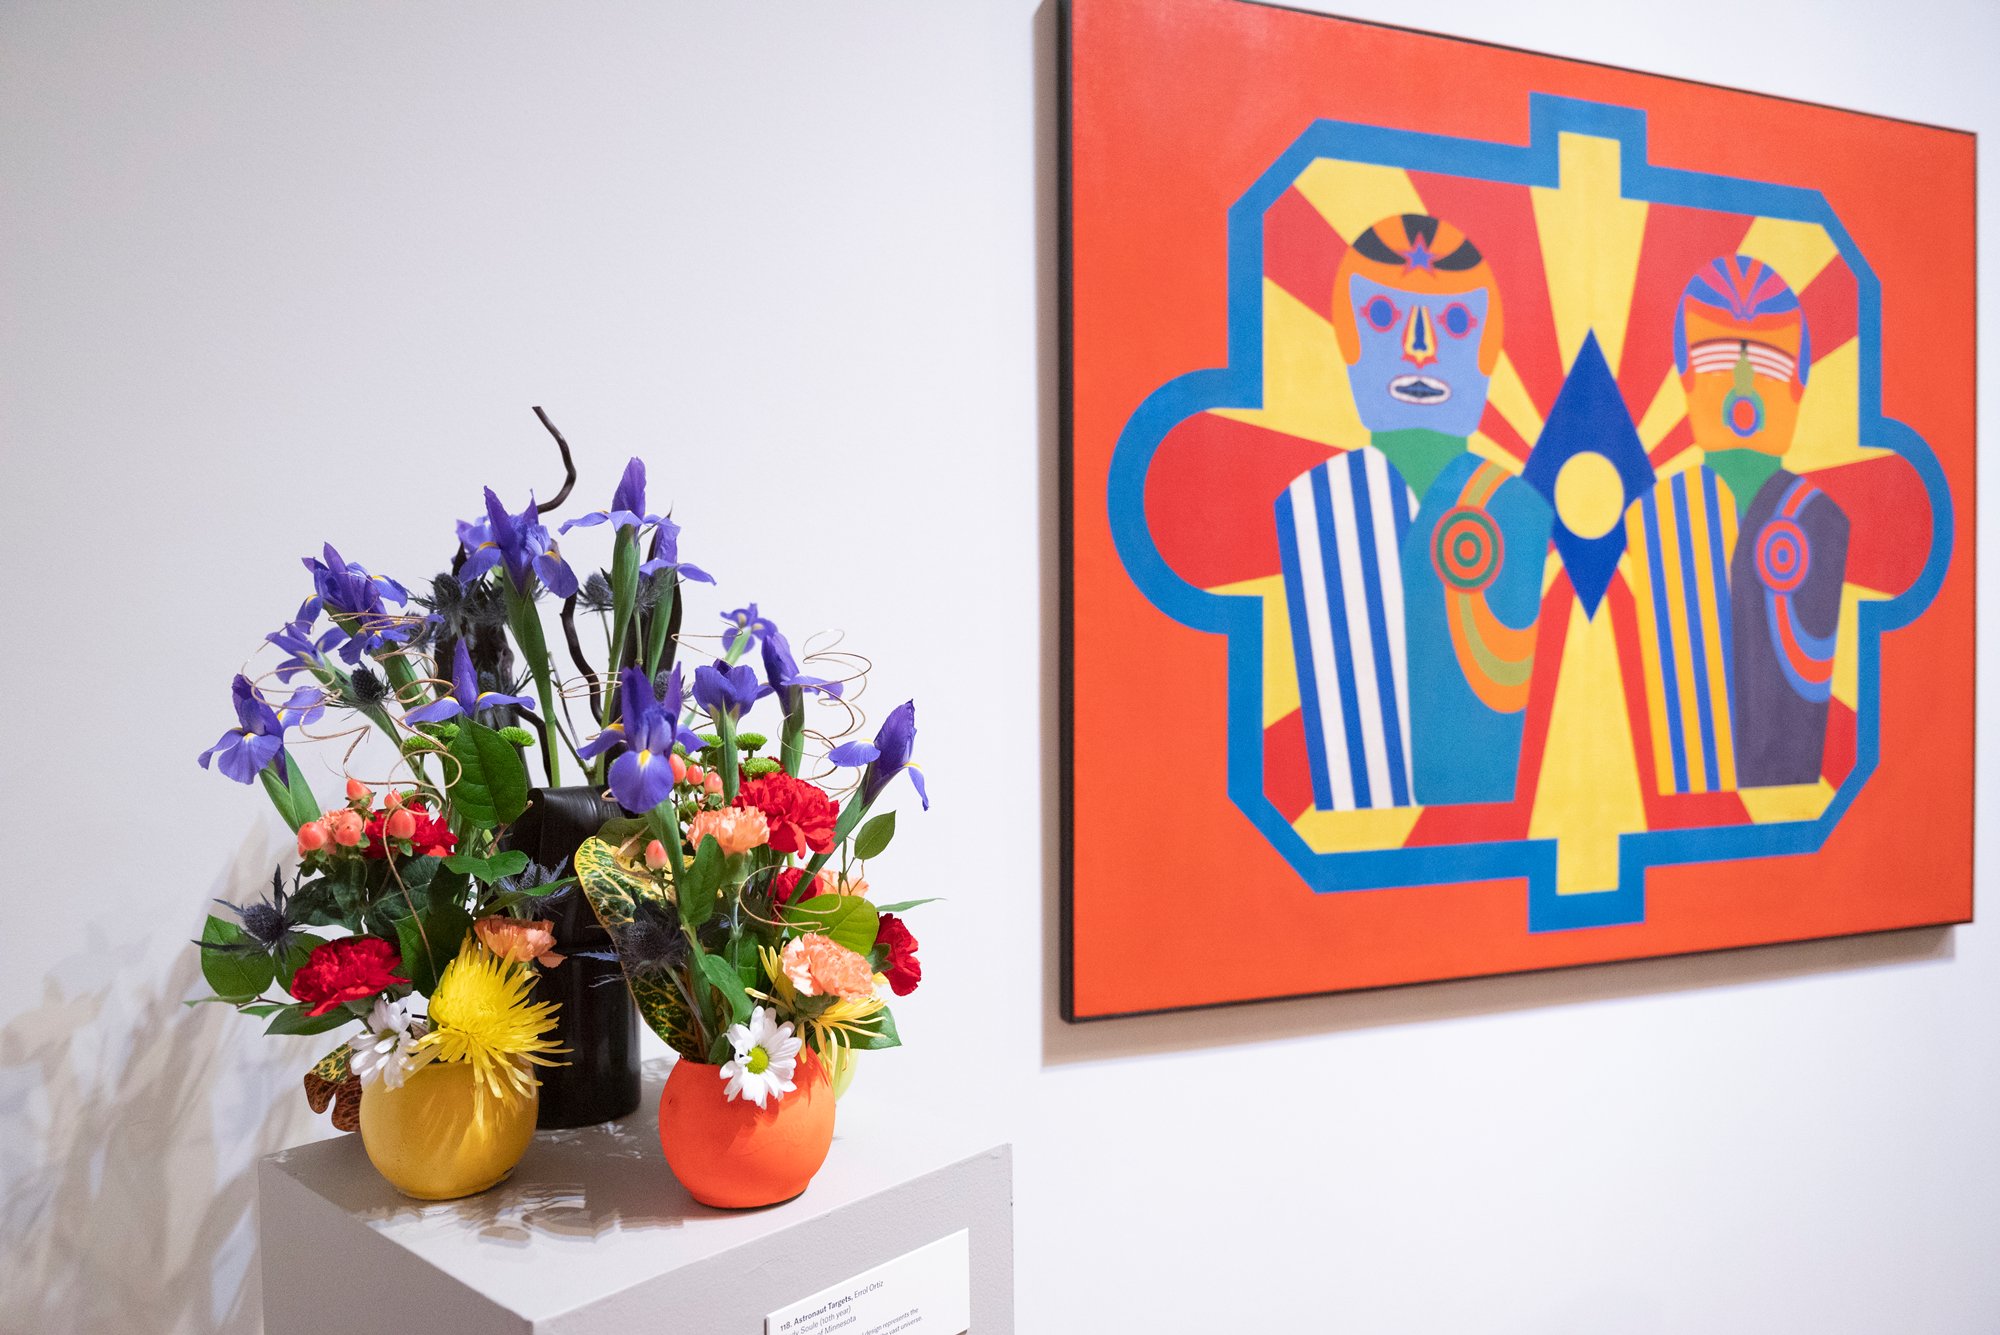 A colorful pop art painting and a floral arrangement interpreting it